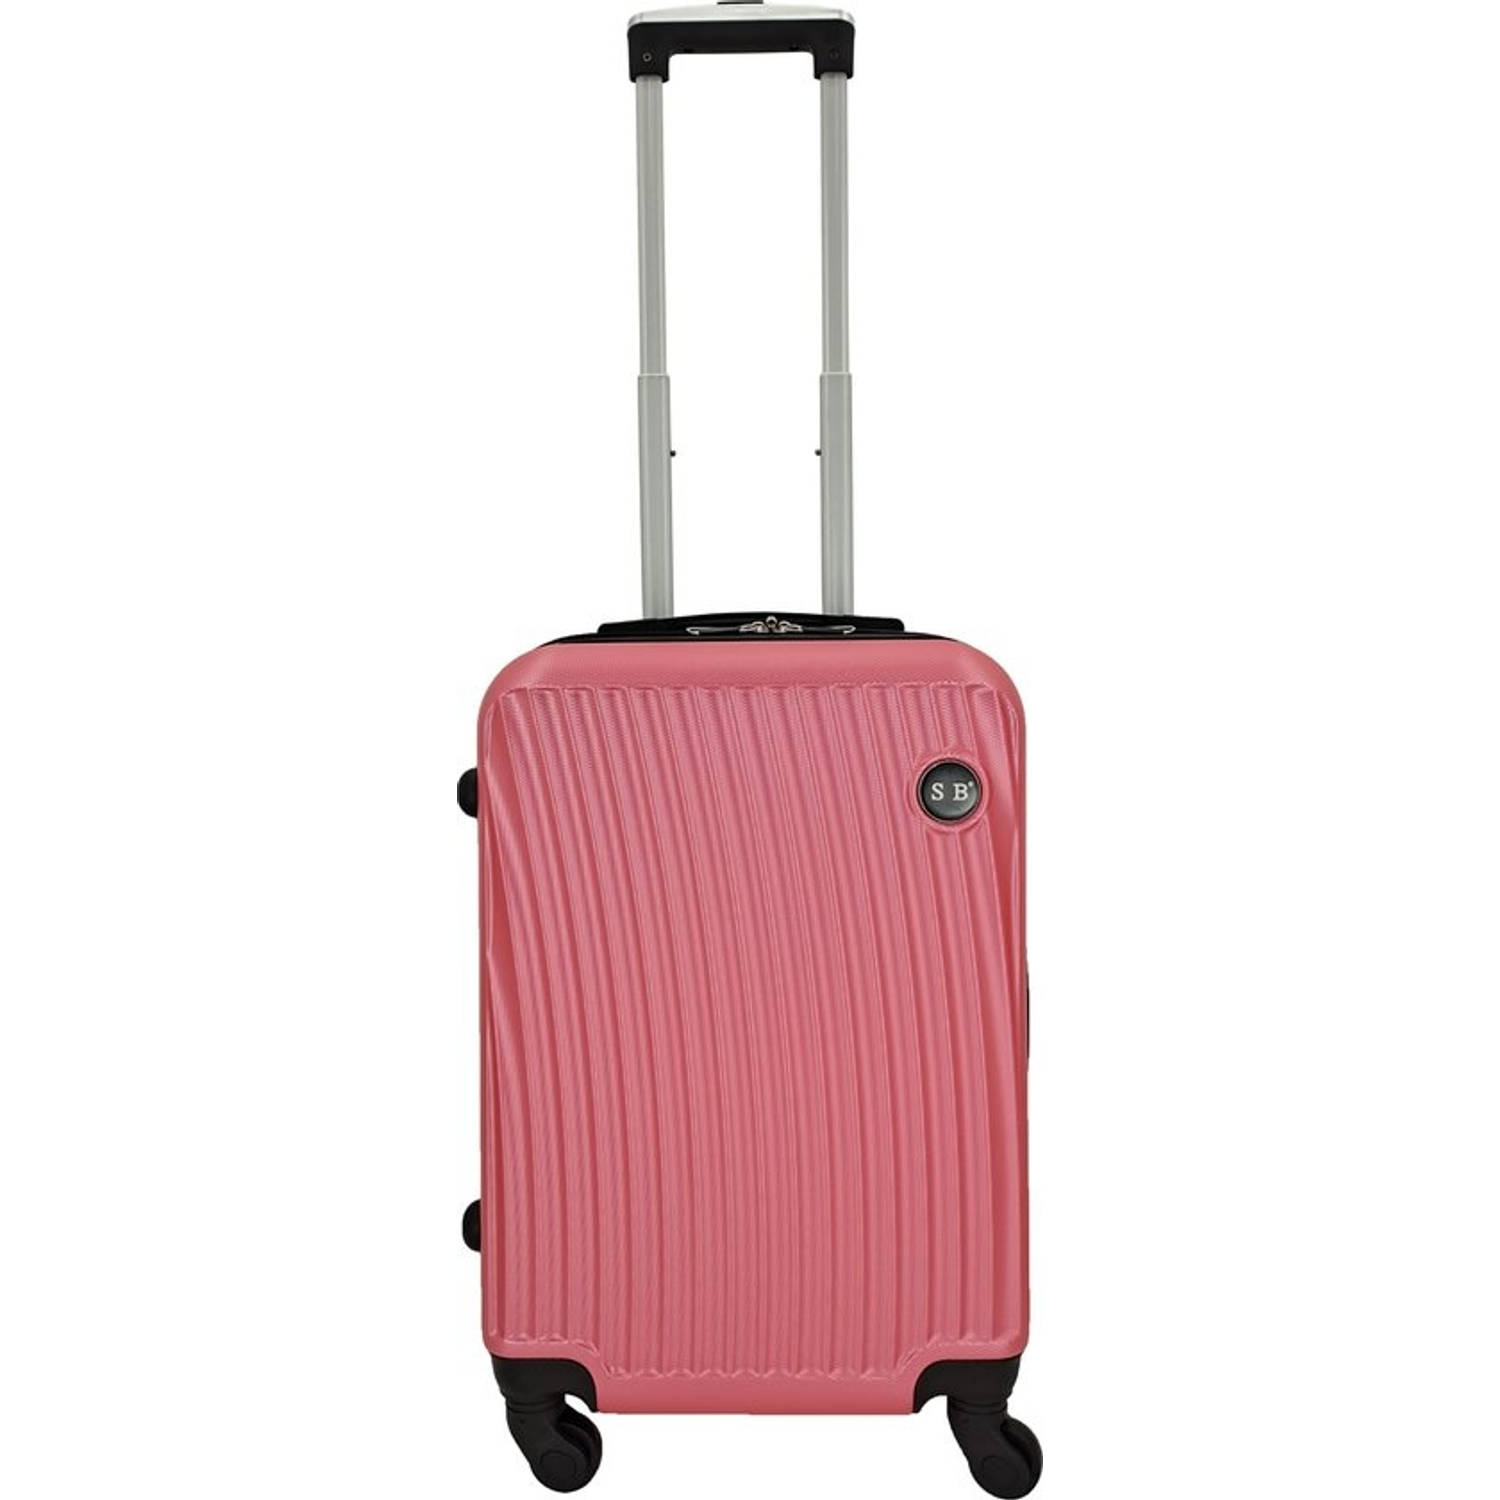 Sb Travelbags Small Koffer Voor Handbagage - Roze